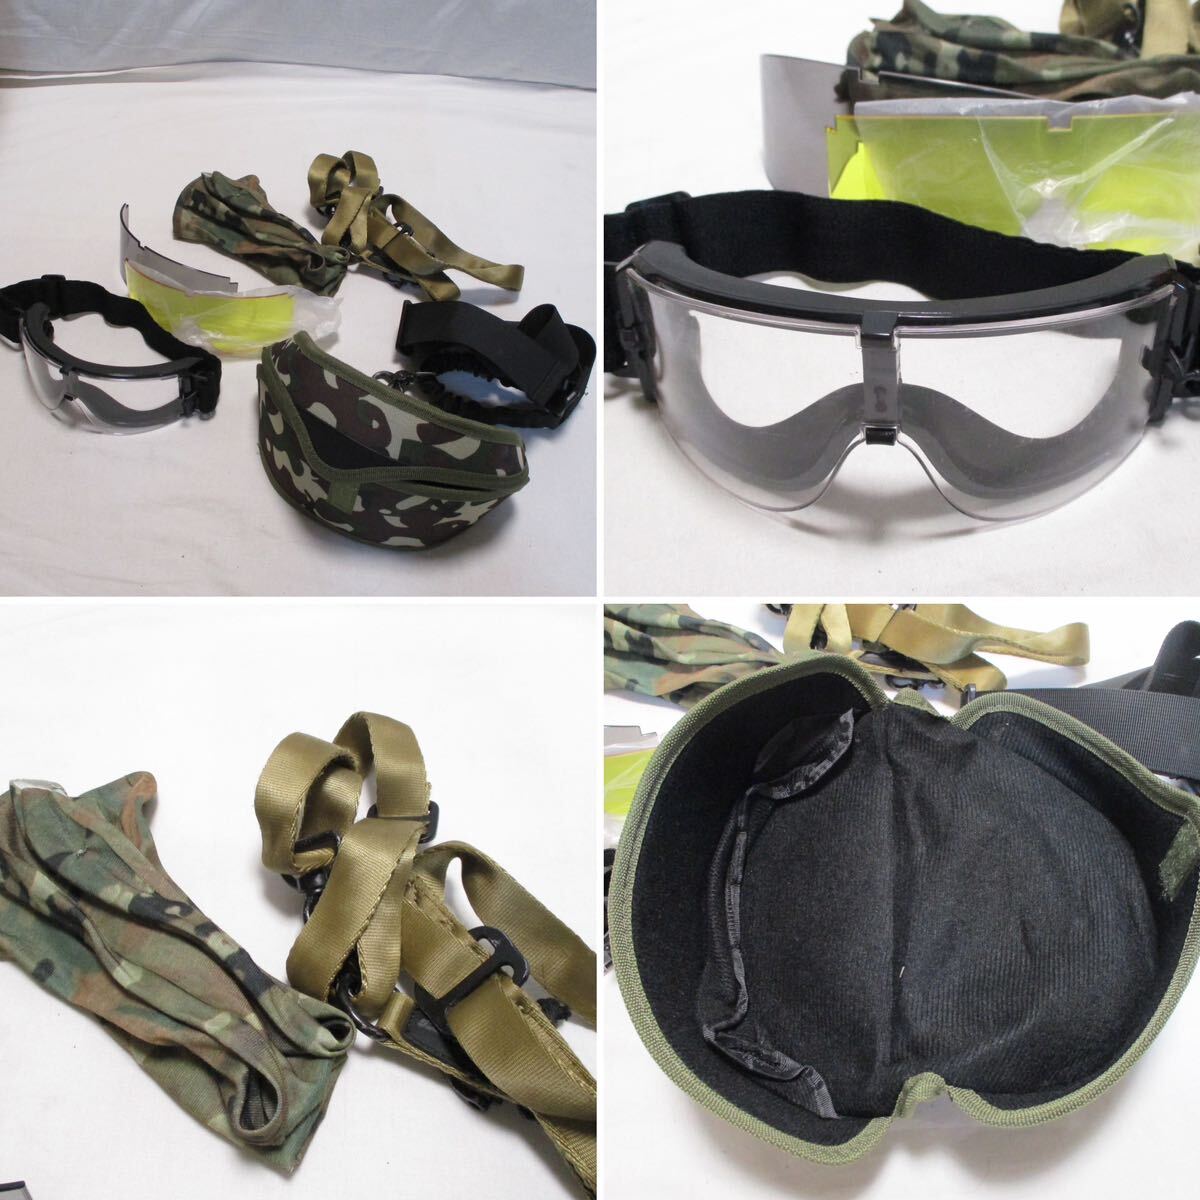 M240412B120* military airsoft fixtures equipment belt helmet Tactical Vest mask pouch summarize .* Yahoo auc .... shipping!*